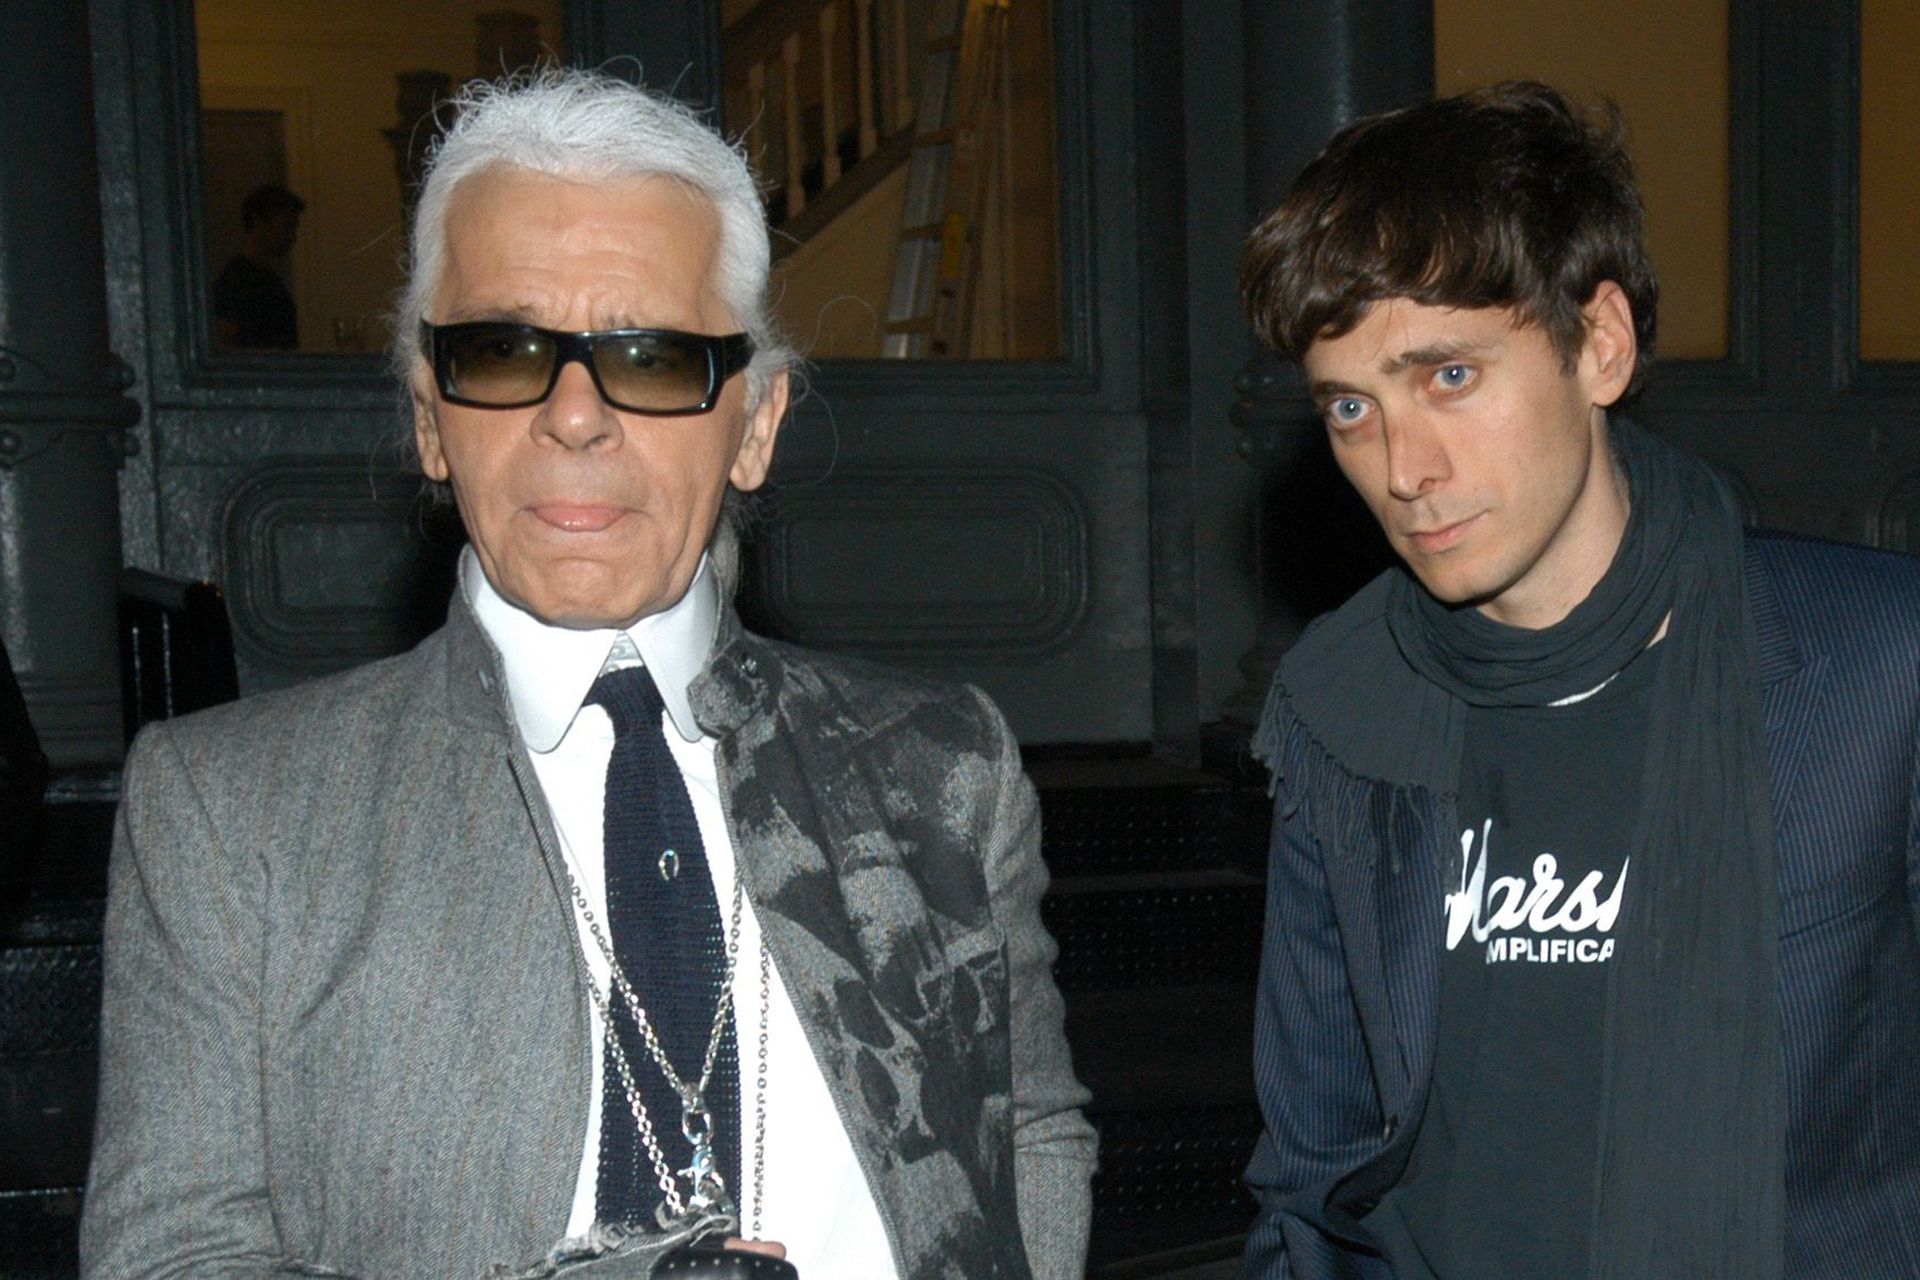 Chanel Hula Hoop Bag - Karl Lagerfeld Explains, British Vogue